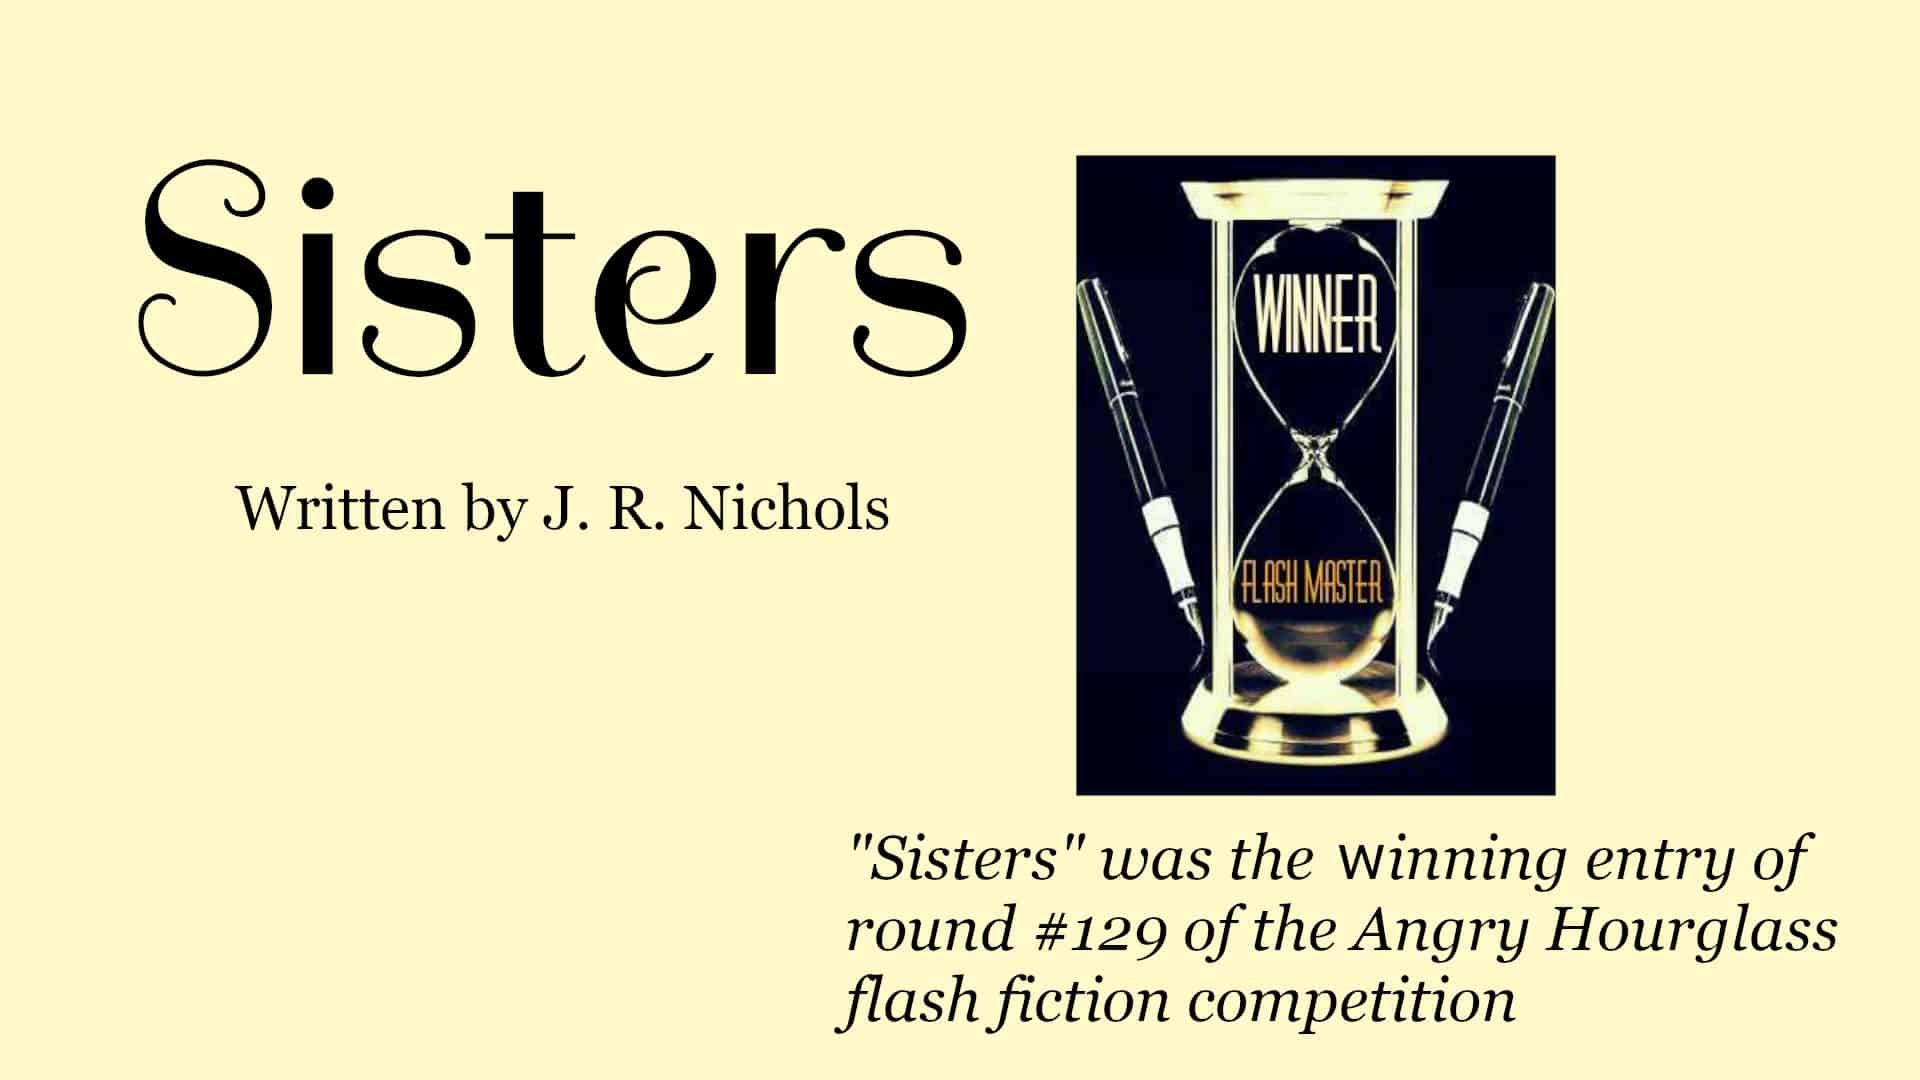 Sisters is a flash fiction by J. R. Nichols